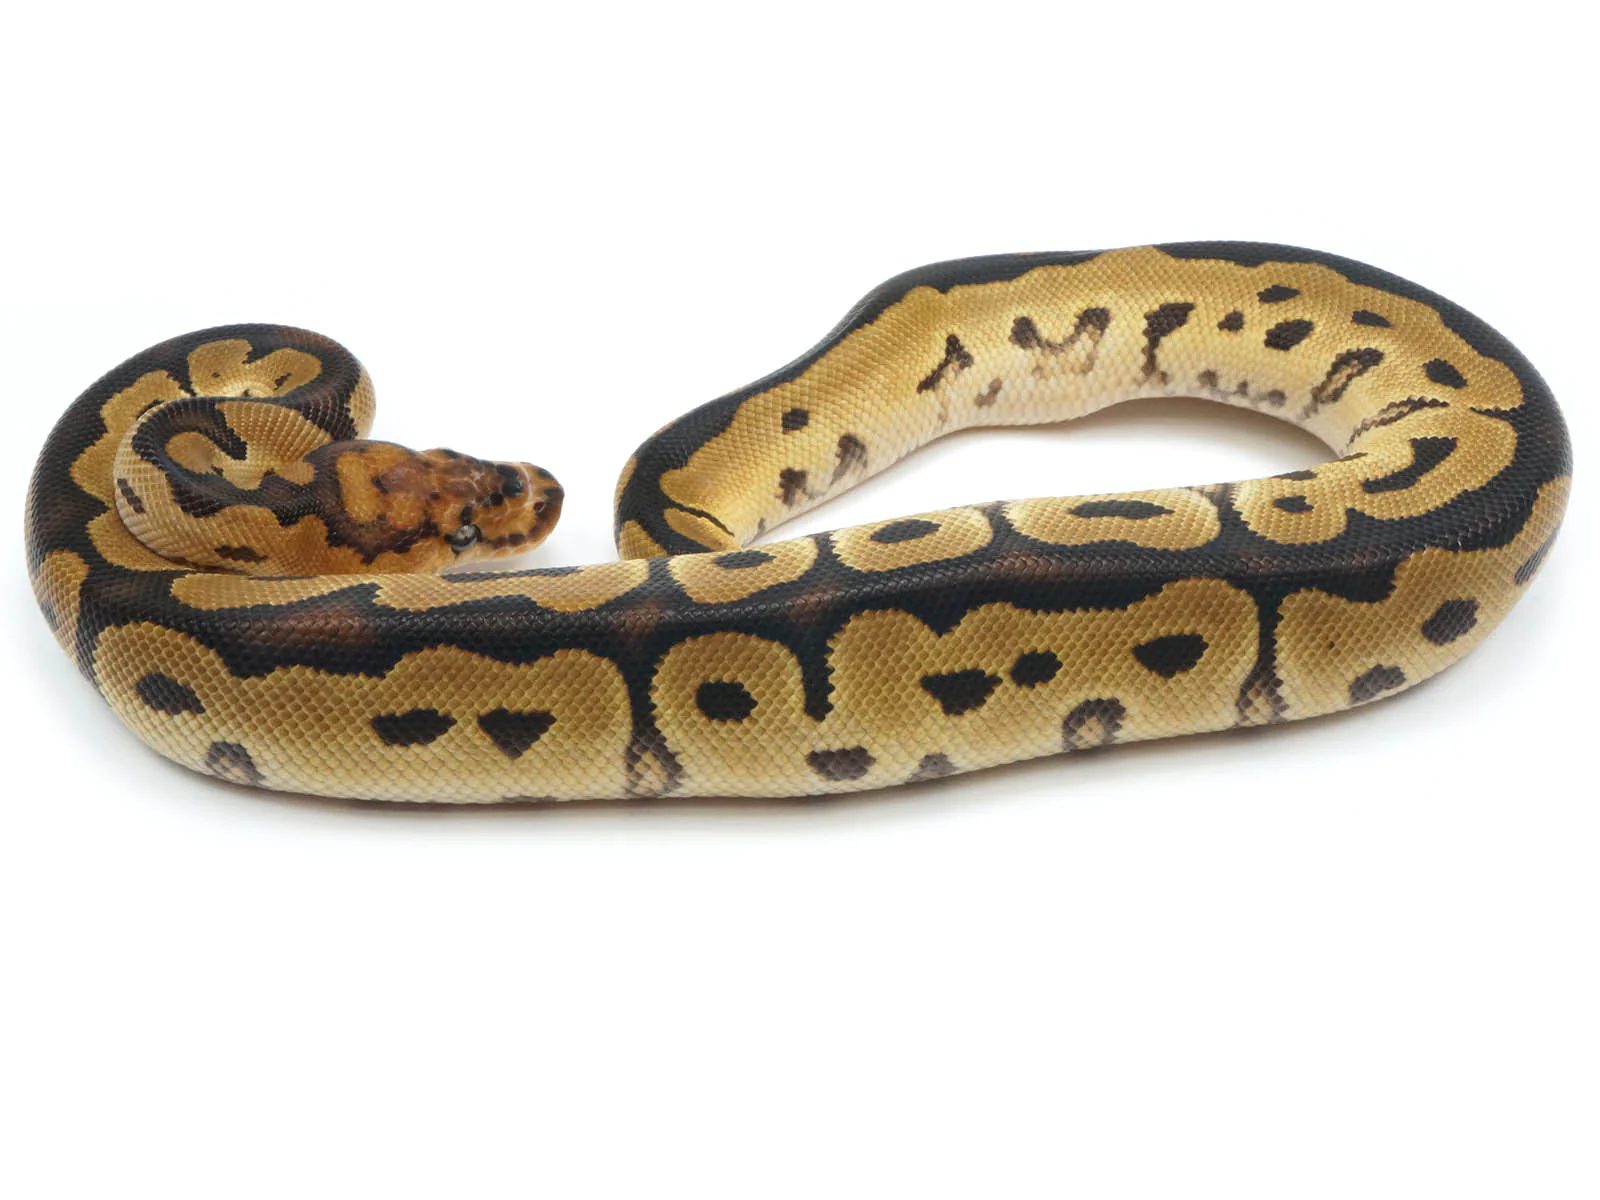 Baby-Ball-Python-Snakes